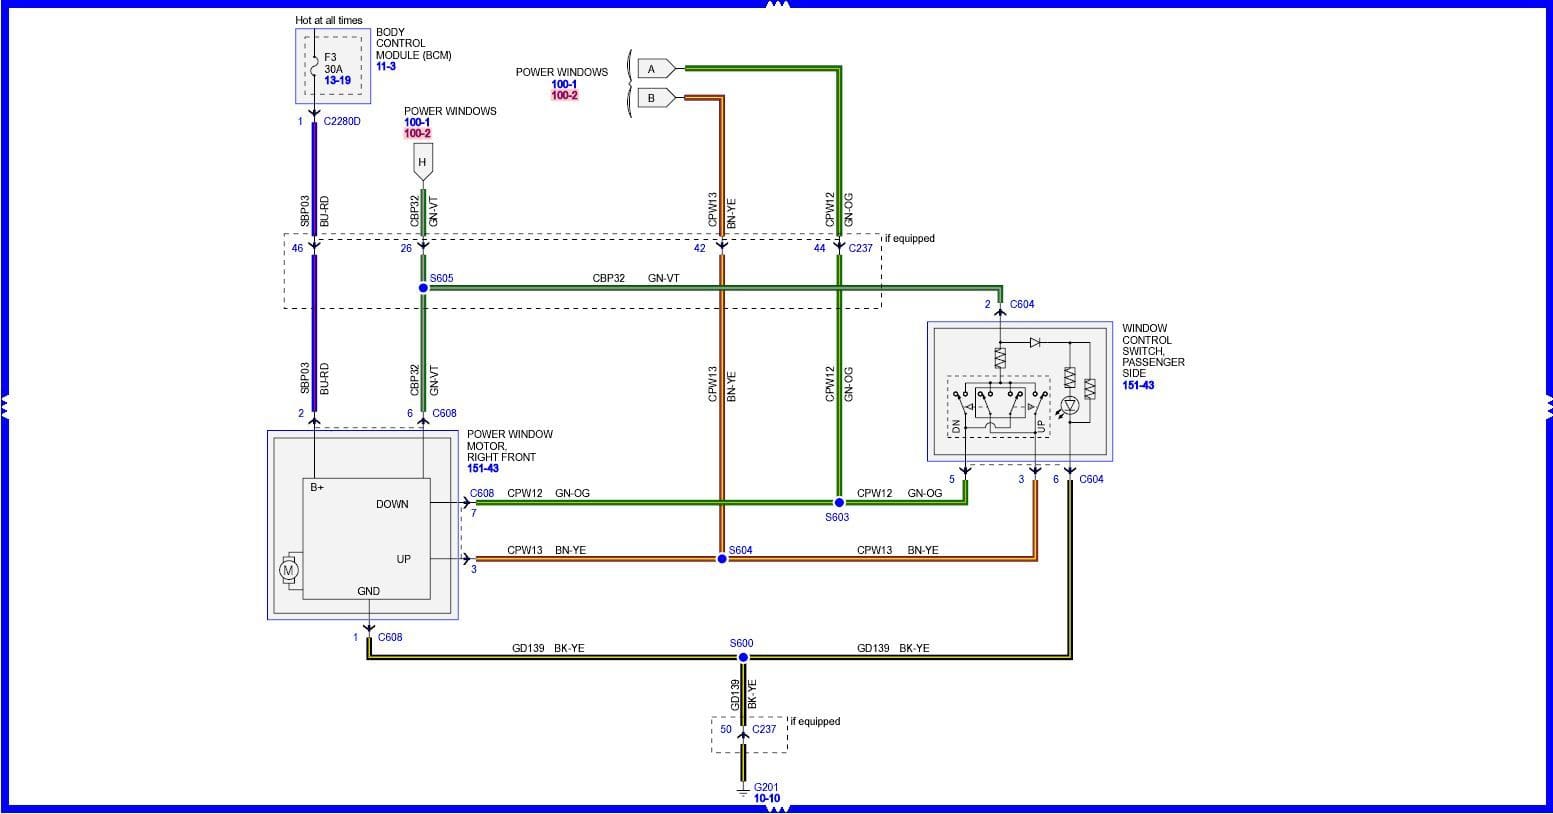 Toyota Power Window Switch Wiring Diagram from cimg9.ibsrv.net